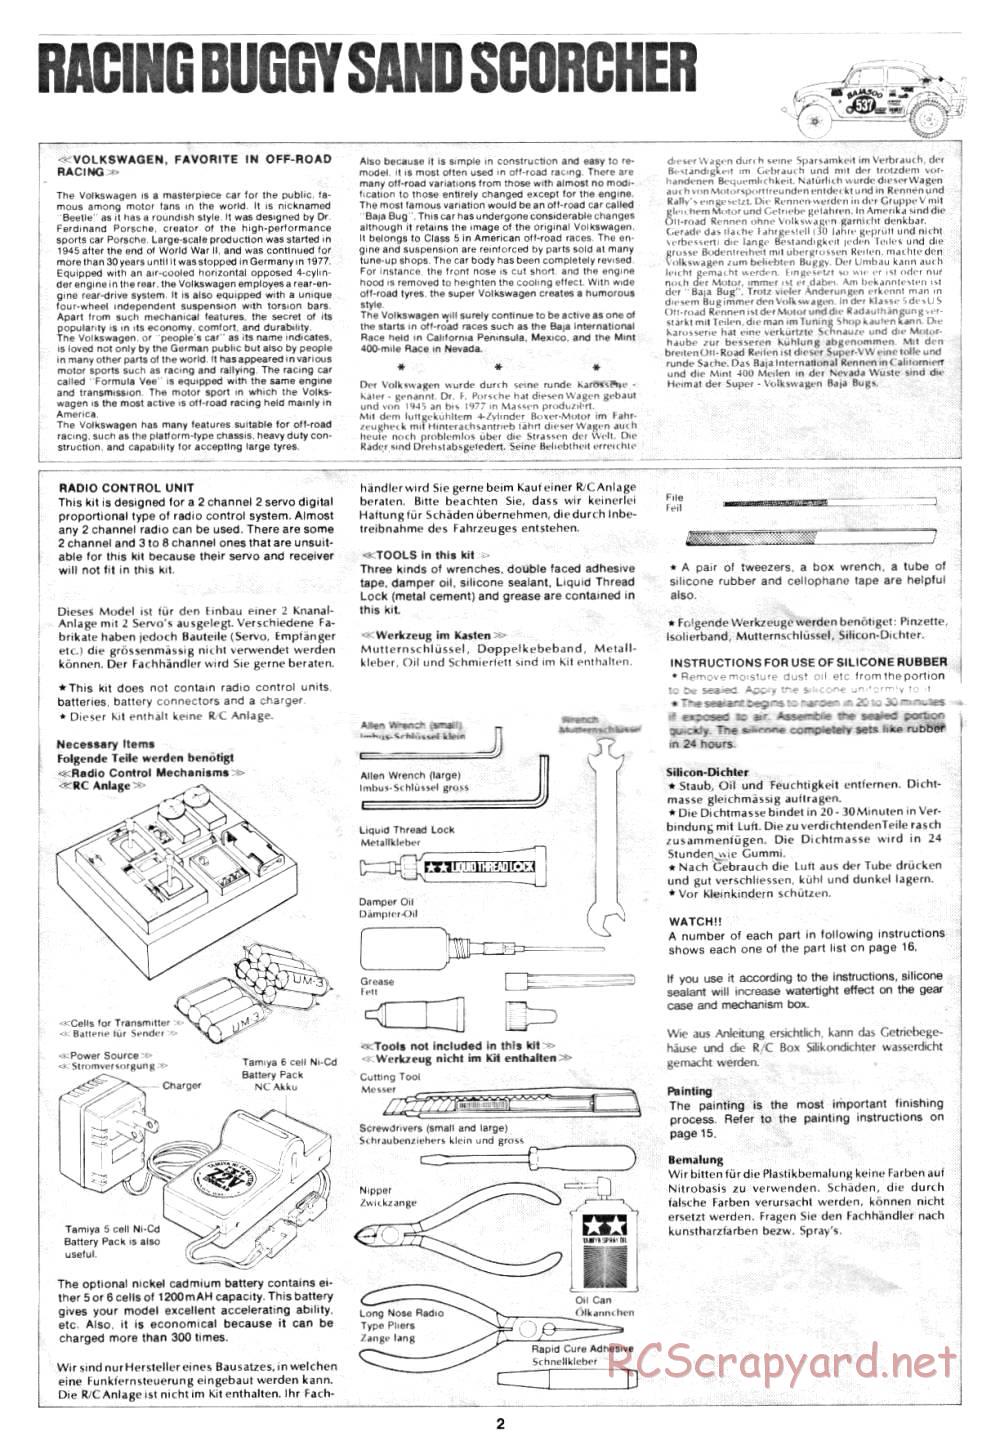 Tamiya - Sand Scorcher - 58016 - Manual - Page 2